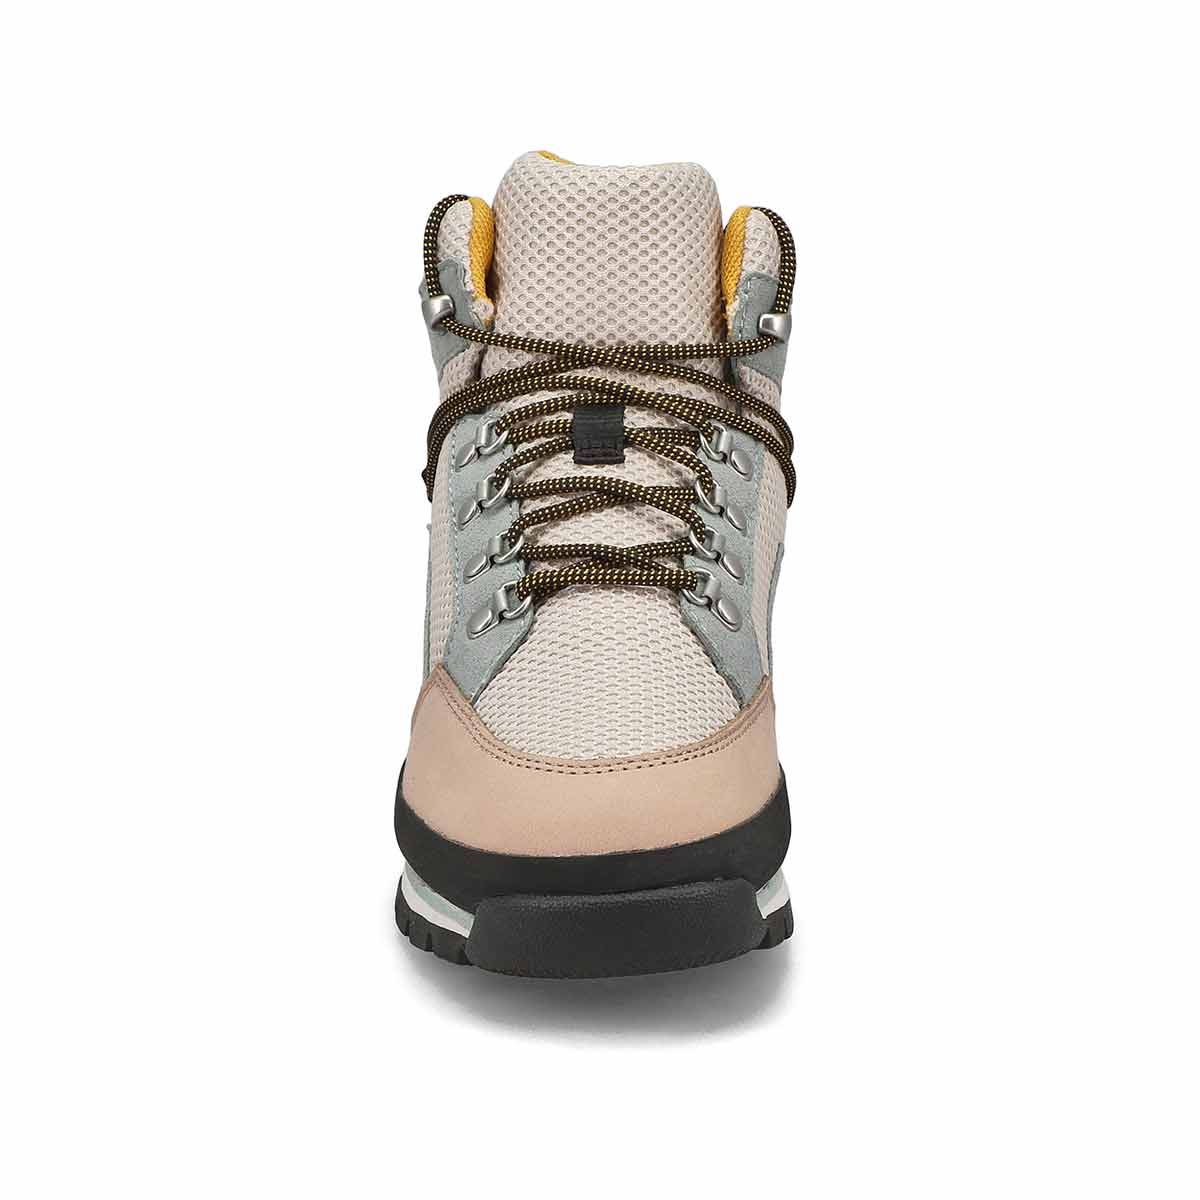 Women's Euro Hiker Hiking Boot - Light Grey